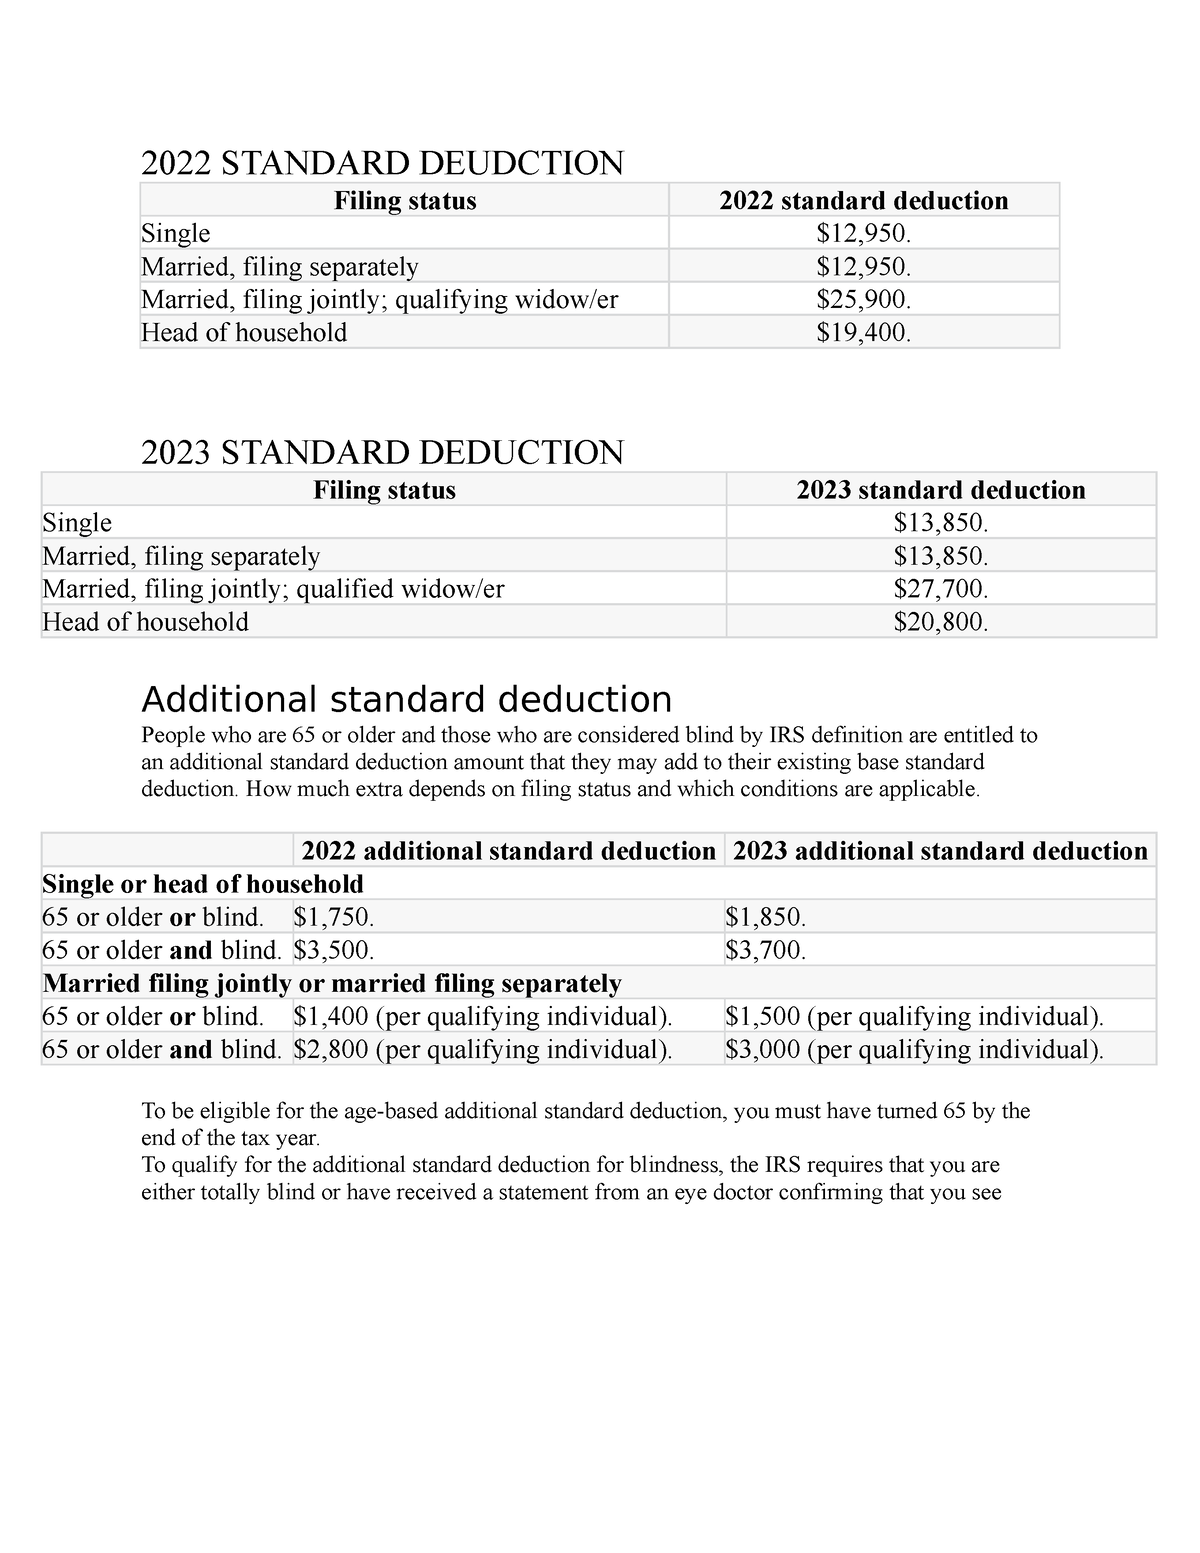 2022 Standard Deduction Pages 2022 Standard Deudction Filing Status 2022 Standard Deduction 0400